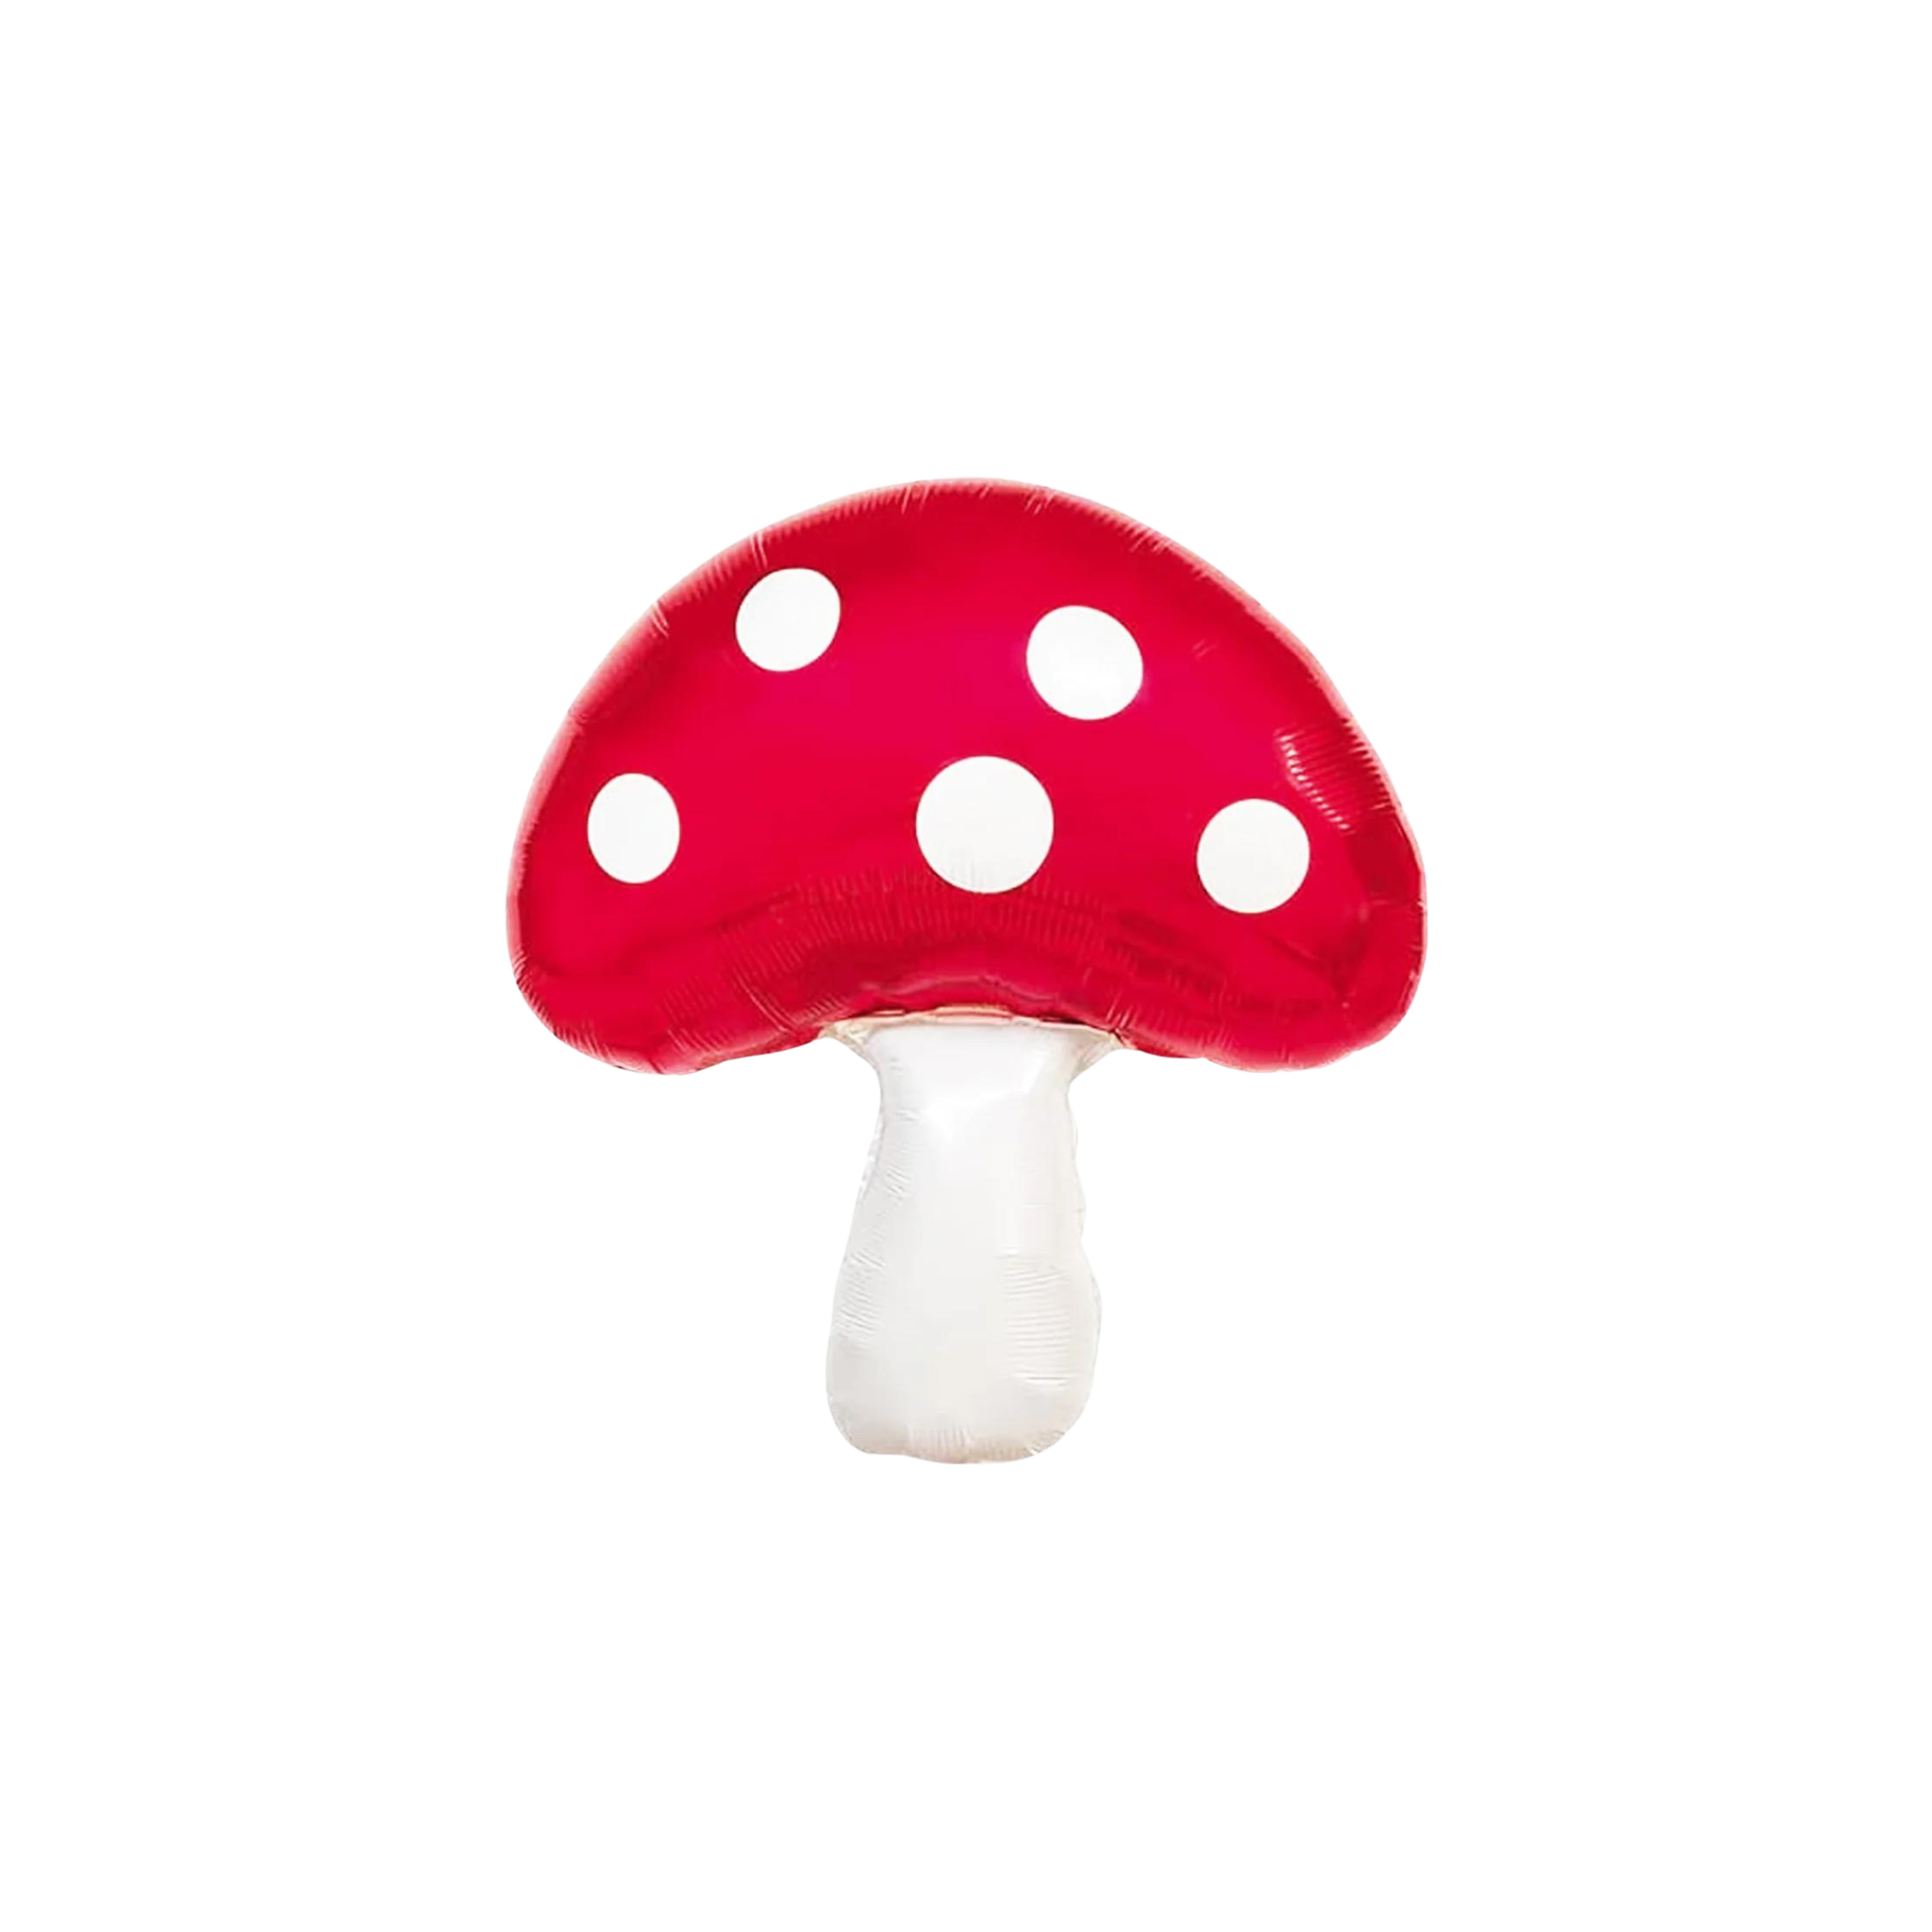 Mushroom Balloon